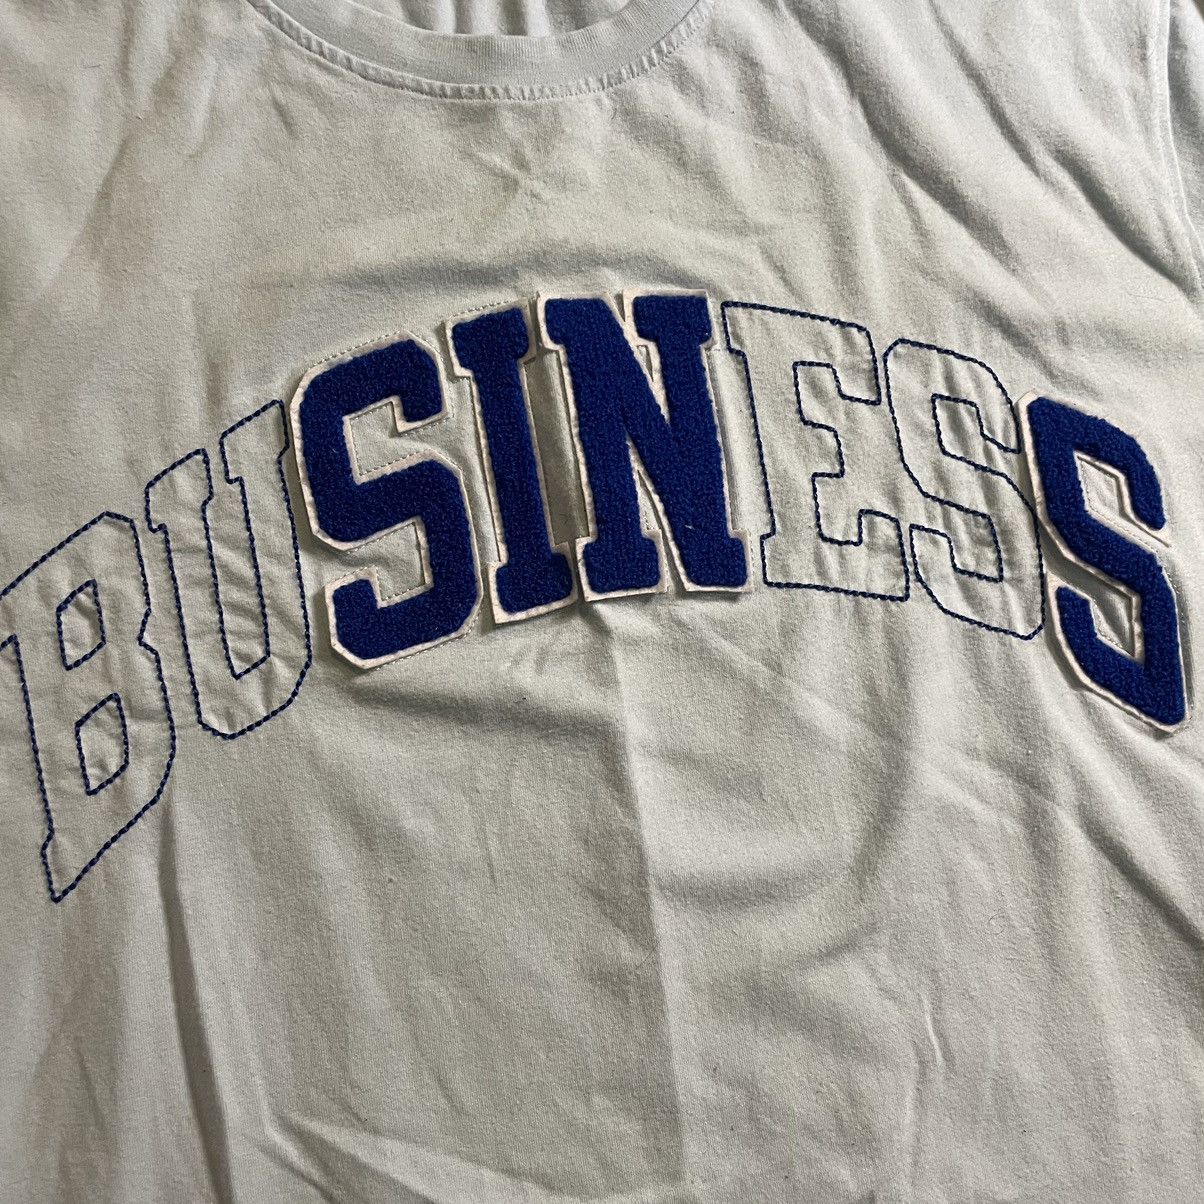 Streetwear WORN Hudson Outerwear Business (Sins) Shirt “Blue” Size US M / EU 48-50 / 2 - 3 Thumbnail